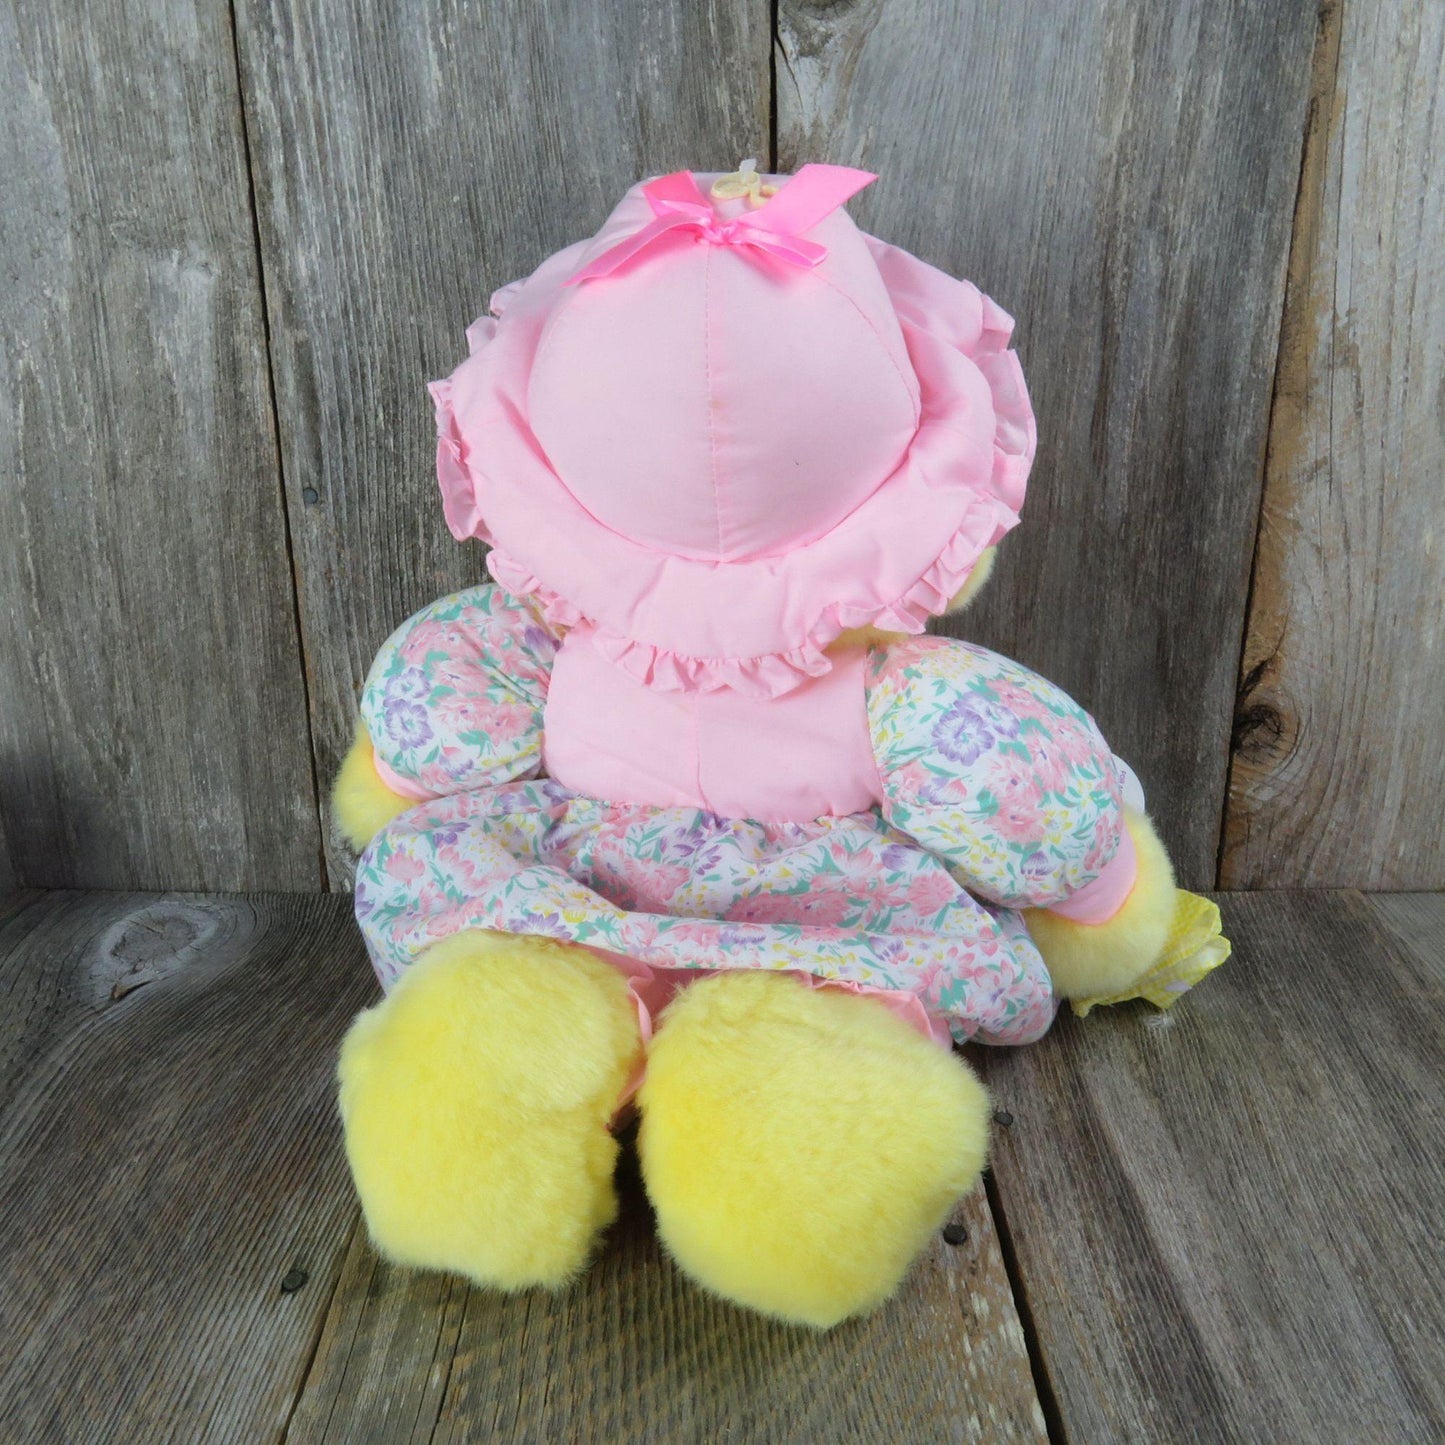 Vintage Duck Duckling Plush Chick Chicken Fabric Body Easter Bonnet Flower Dress Stuffed Animal Well Made 1995